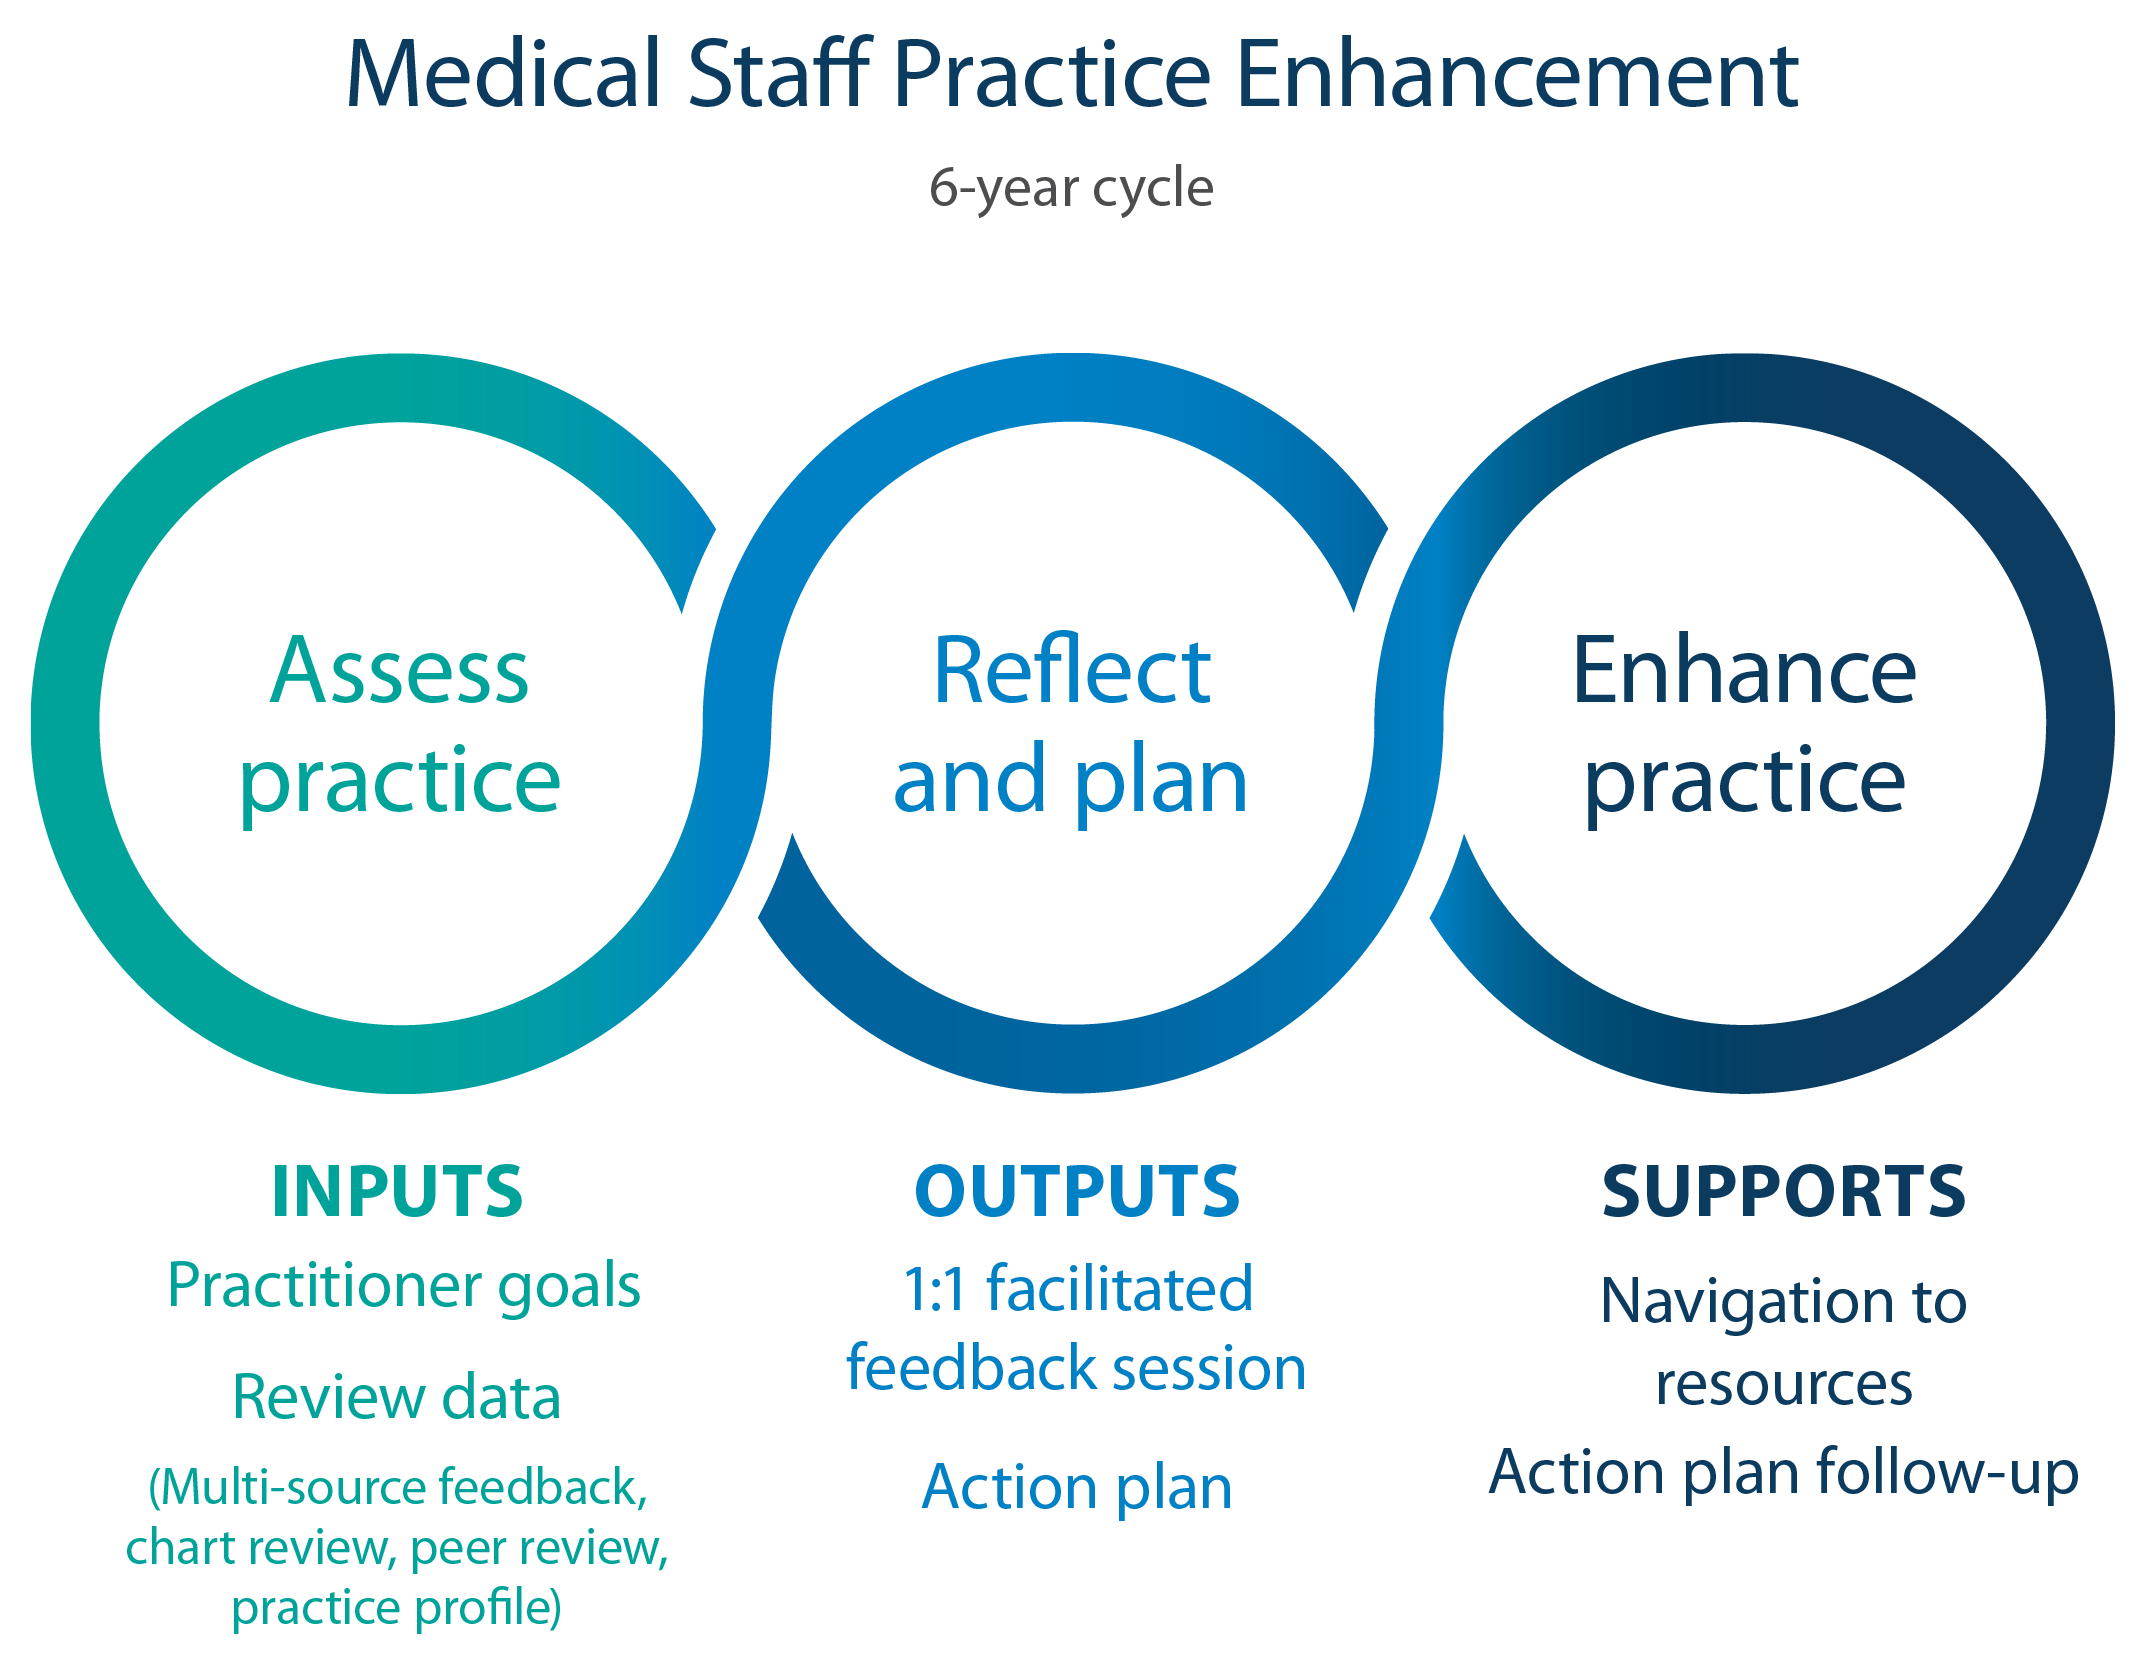 Medical staff practice enhancement model diagram